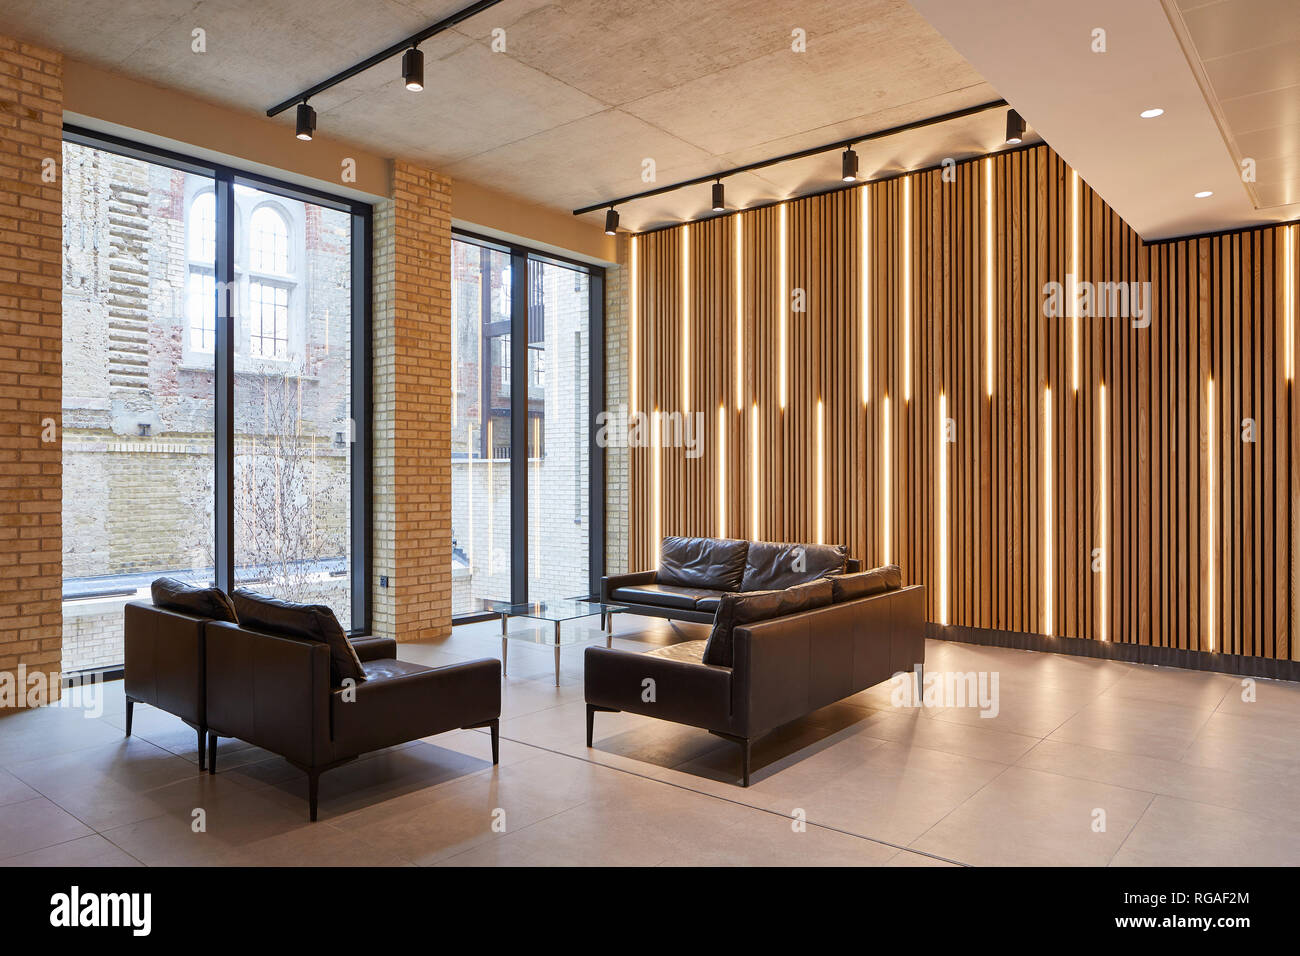 Backlit timber panelling in ground floor lounge. Paul Street, London, United Kingdom. Architect: Stiff + Trevillion Architects, 2018. Stock Photo